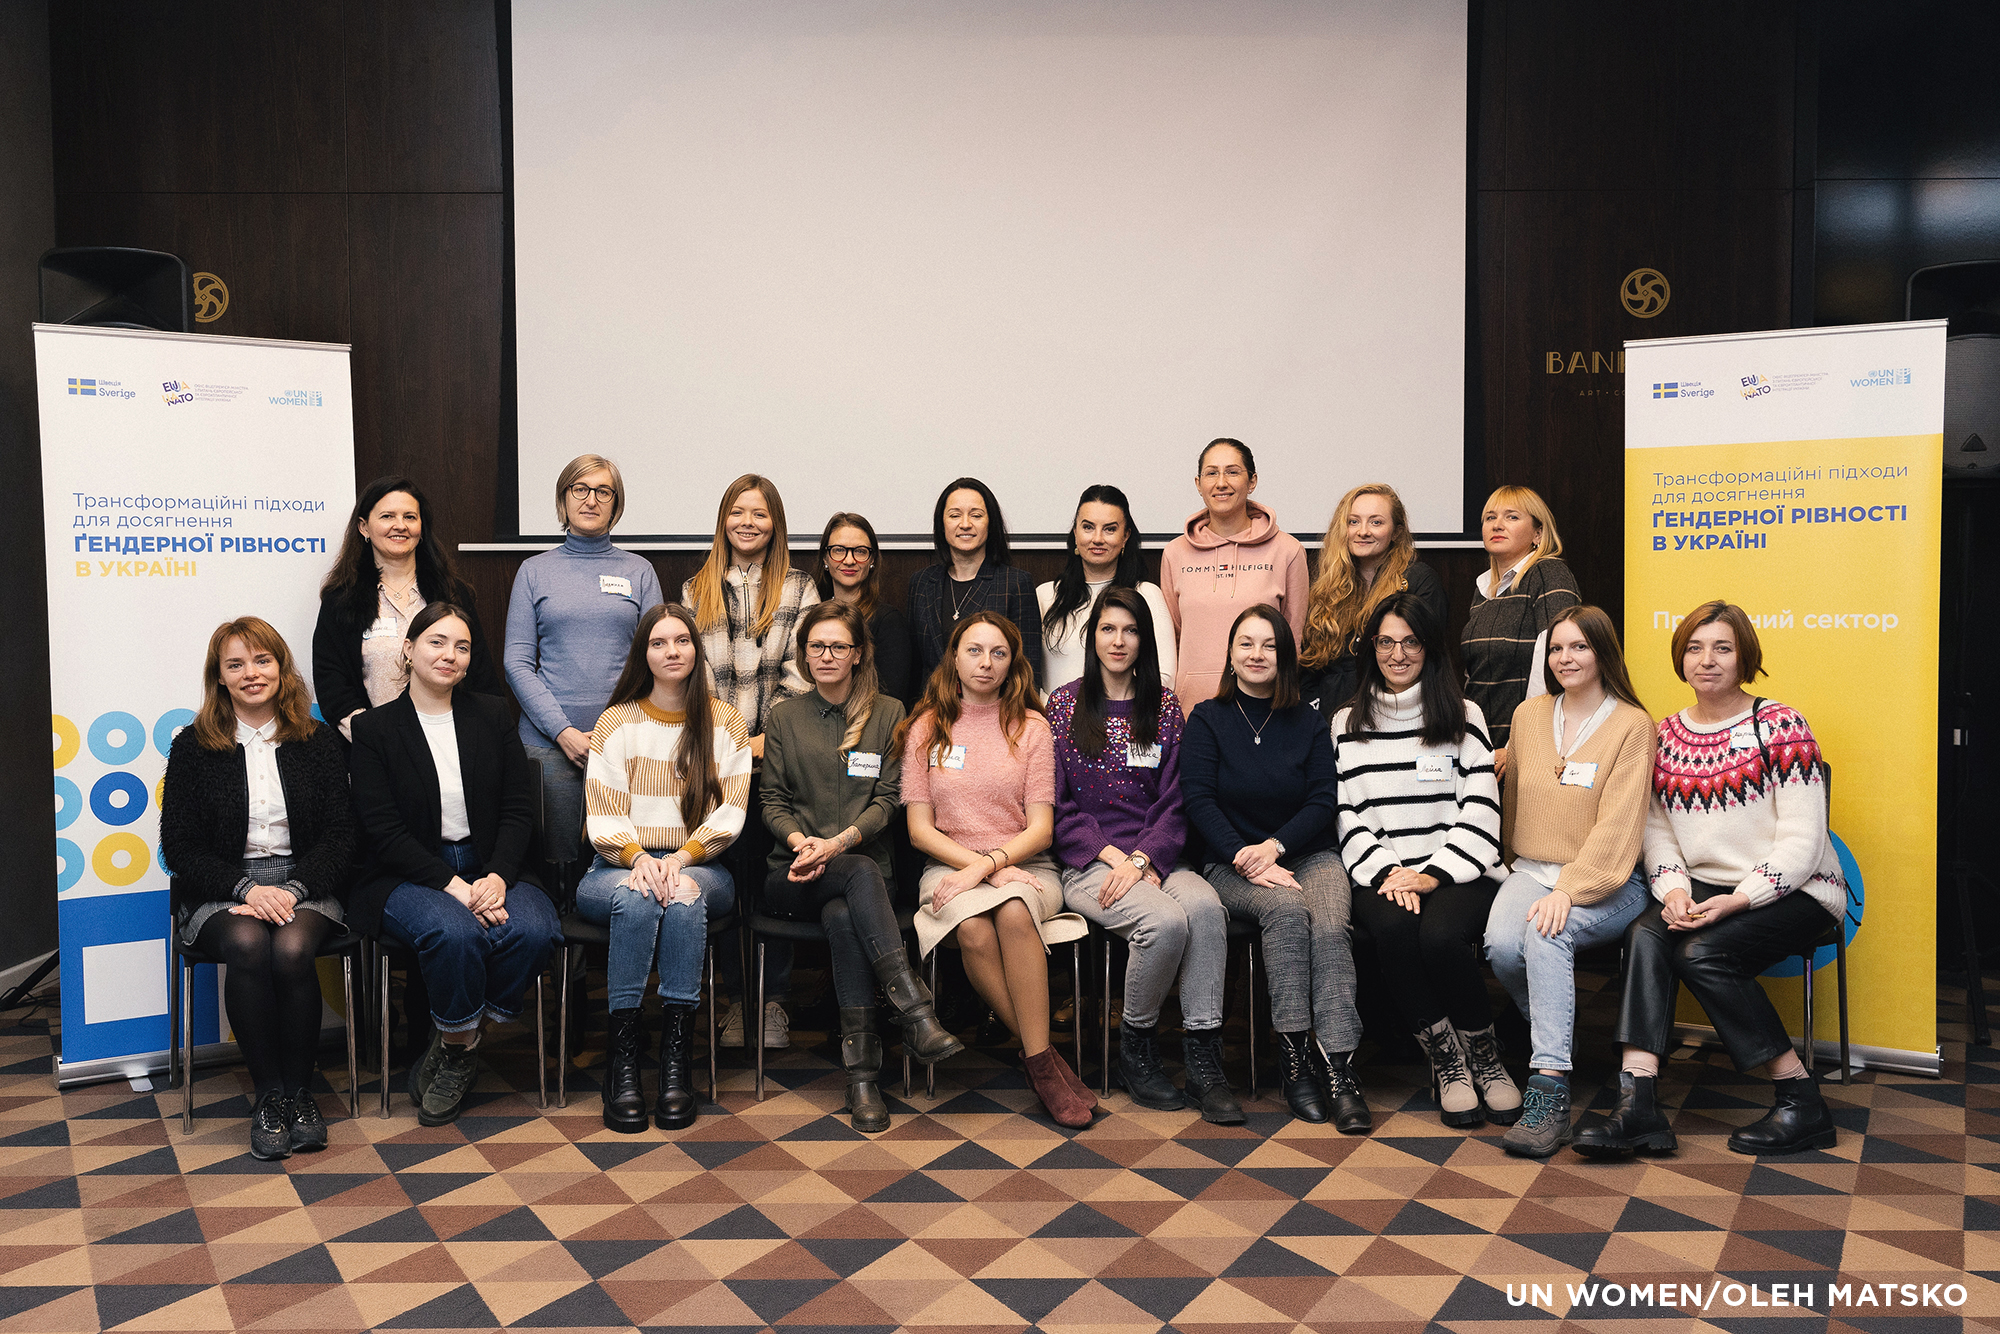 Women entrepreneurs from across Ukraine attended the WEE Congress in Lviv, Ukraine. Photo: UN Women/Oleh Matsko.